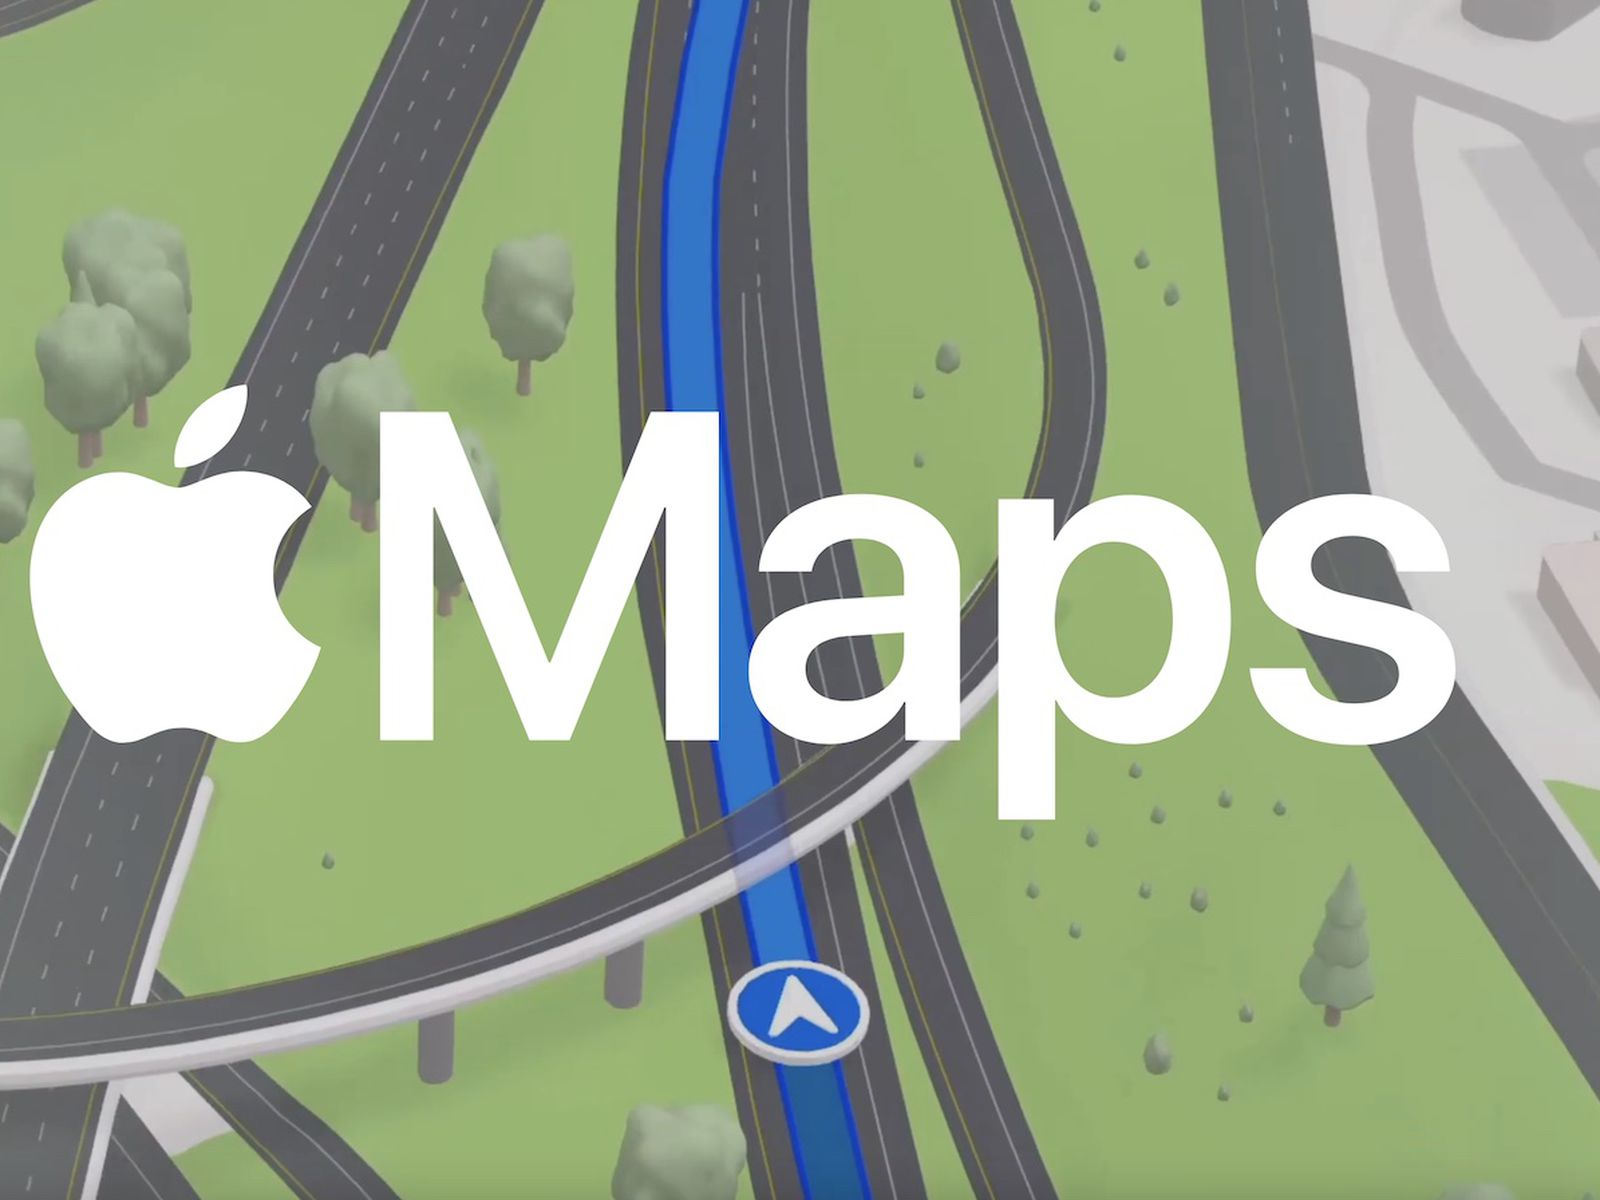 Apple Maps Gradually Winning Over Google Maps Users, Report